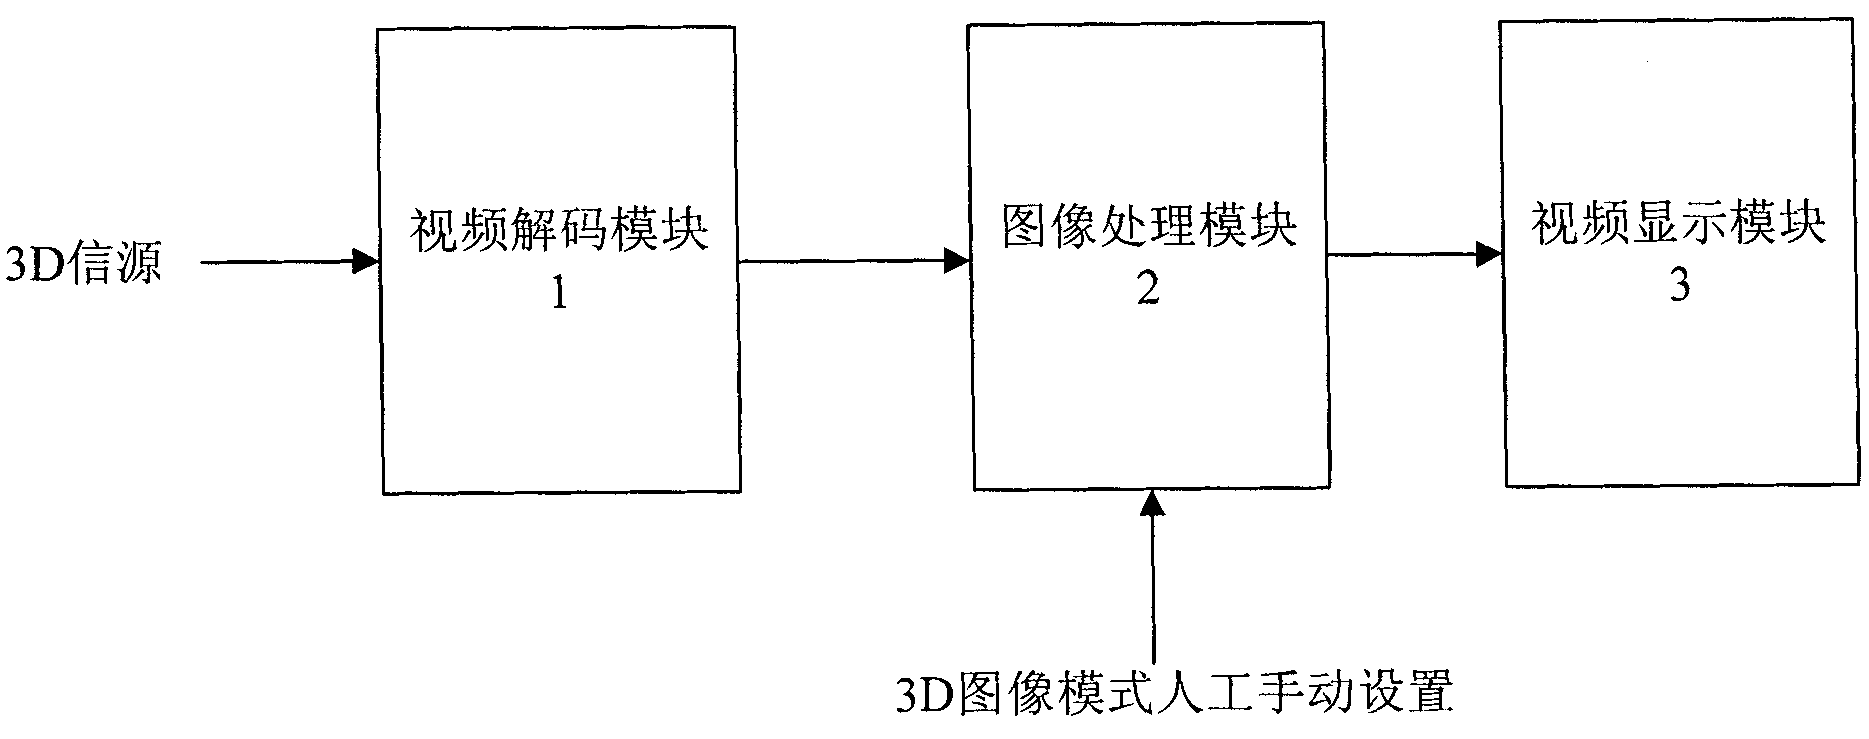 Three-dimensional (3D) display device and display method